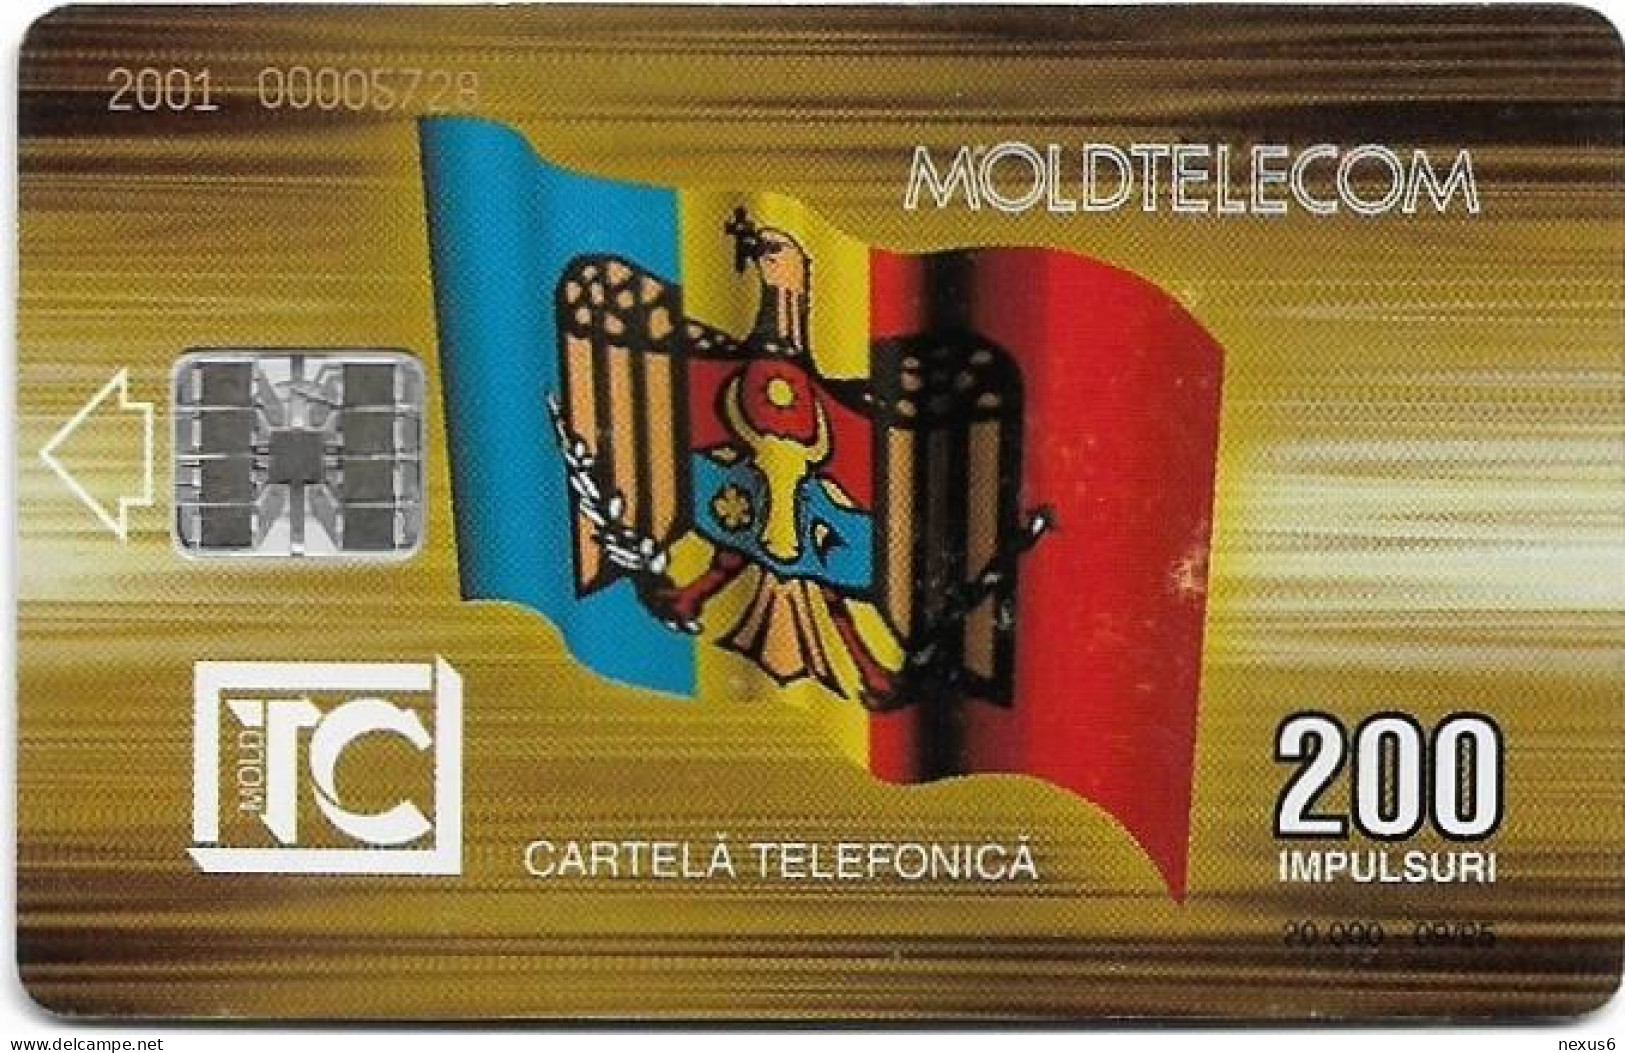 Moldova - Moldtelecom - Flag 2nd Issue, SC7, 09.1995, 200U, 20.000ex, Used - Moldavia